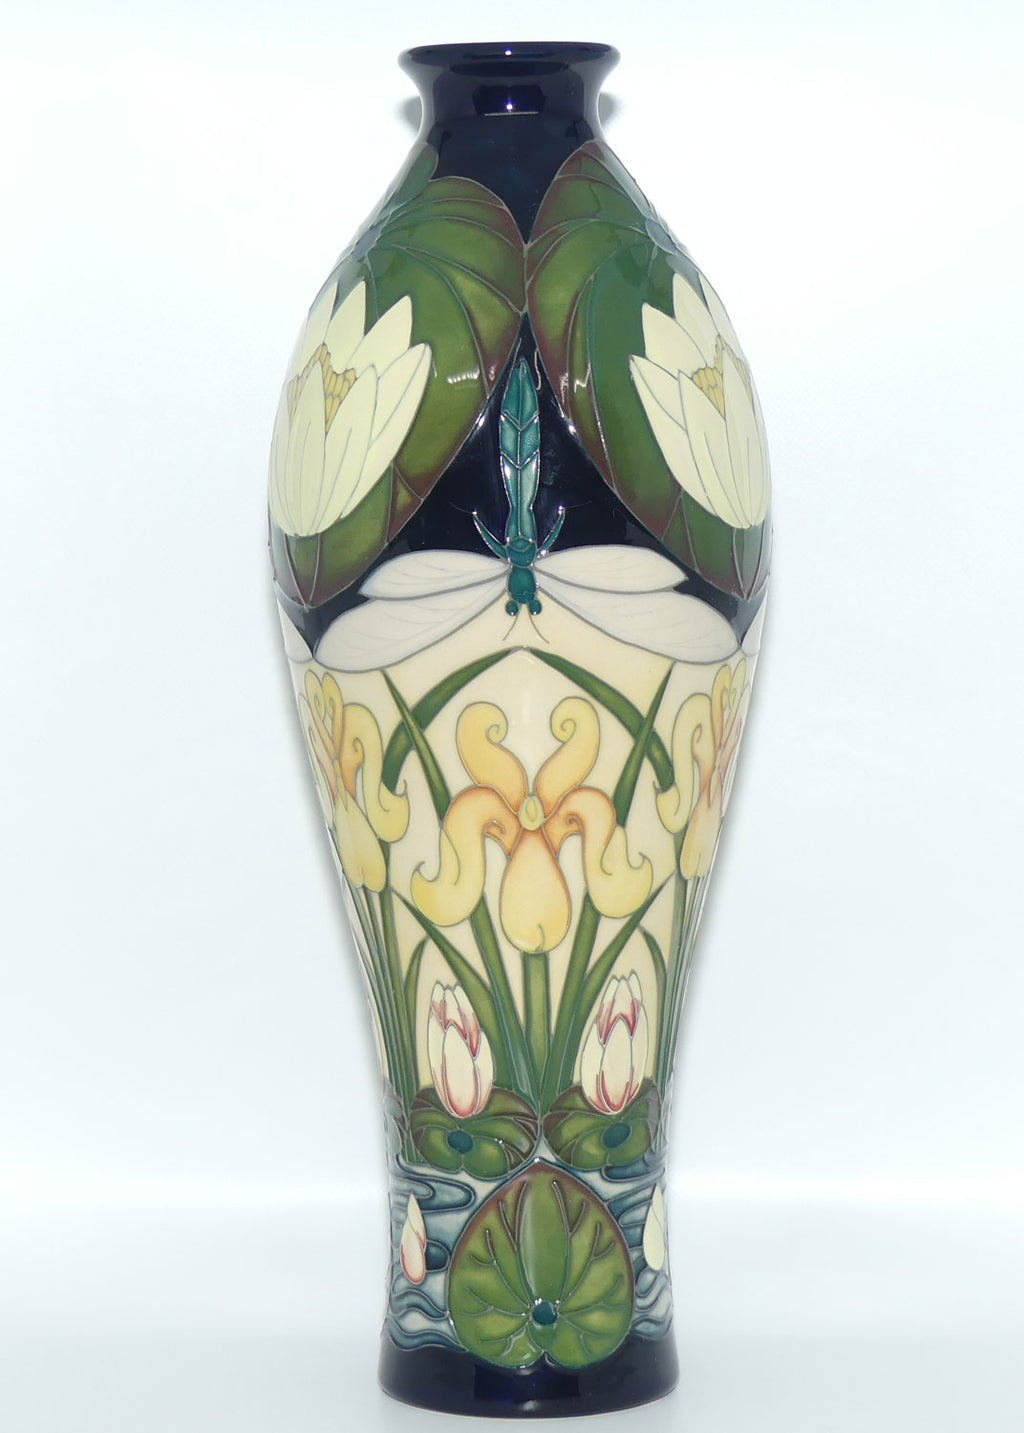 Moorcroft Pottery | Tranquility 42/12 vase | Rachel Bishop